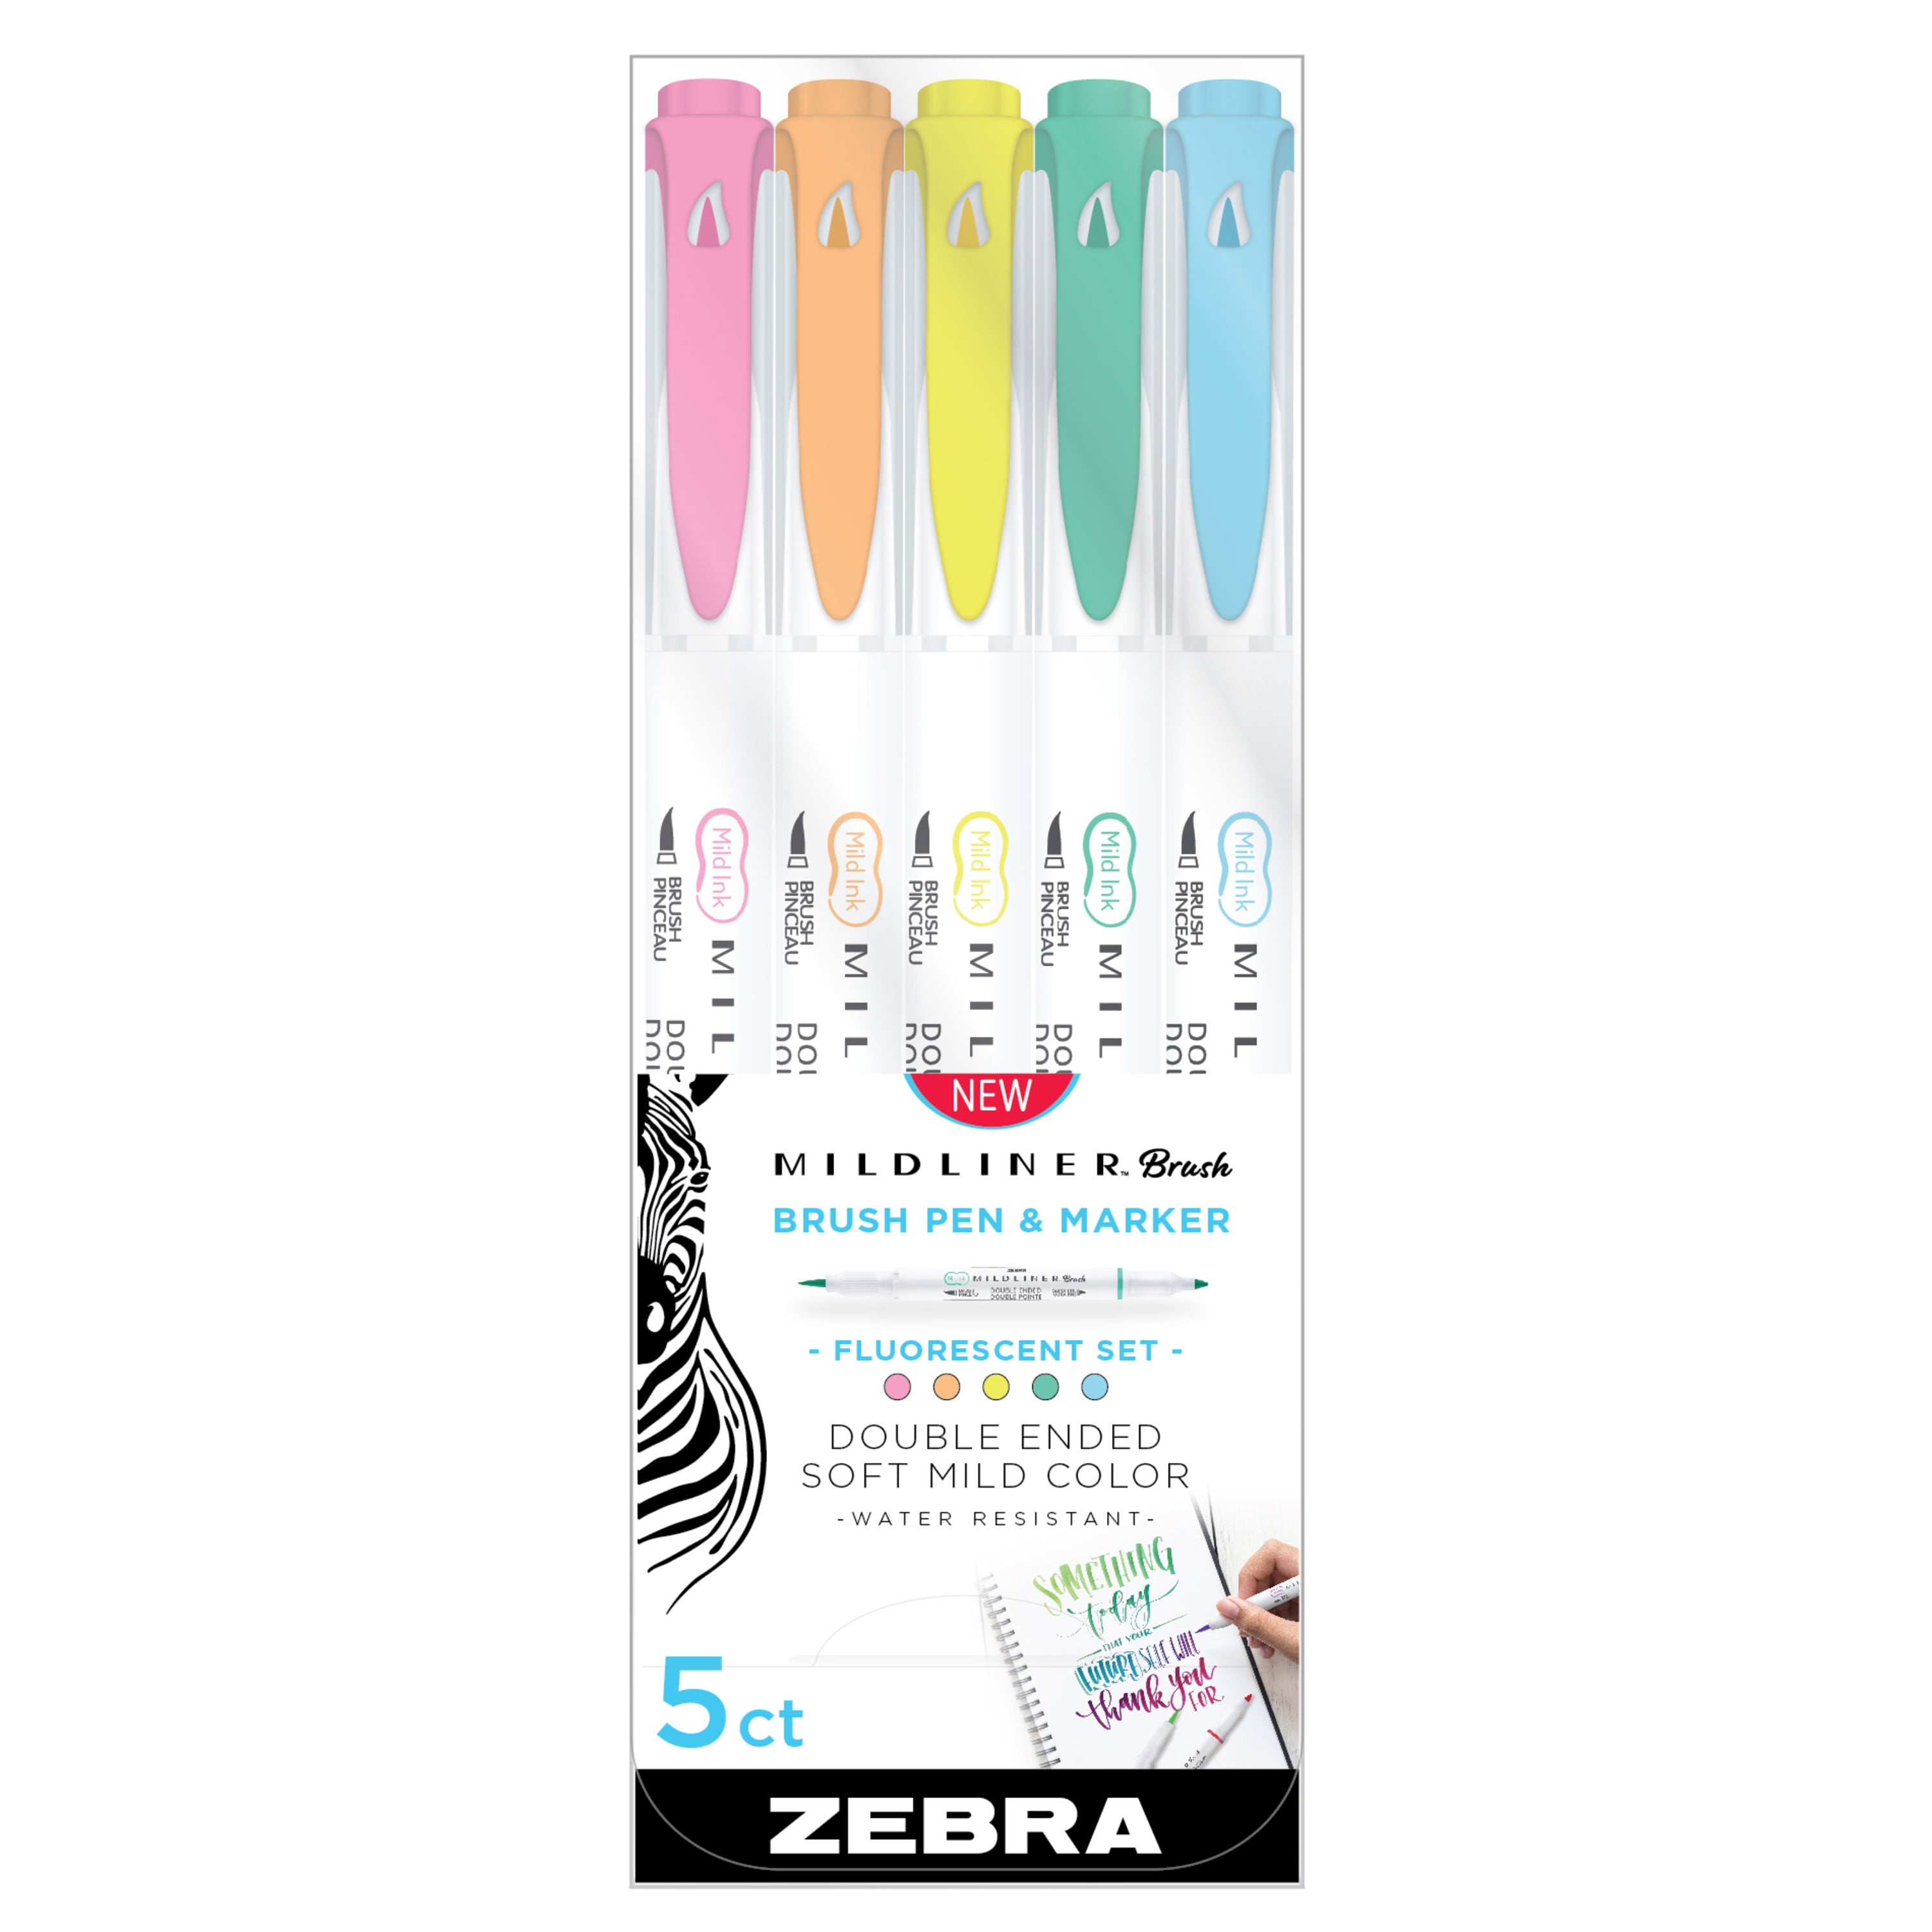 Zibra Best Paintbrush Set - Blue Star At Home